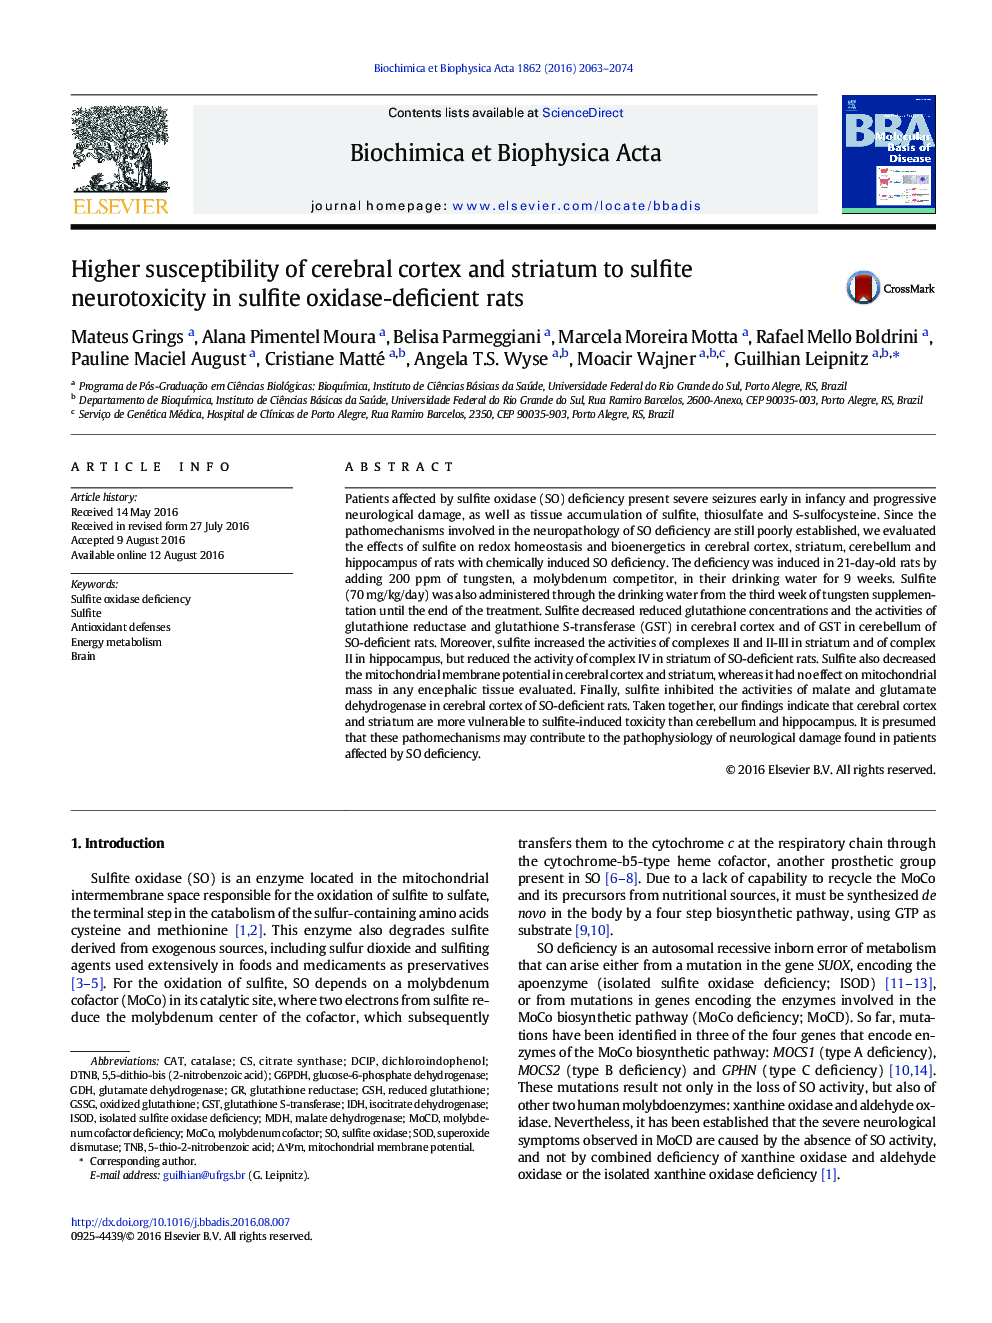 Higher susceptibility of cerebral cortex and striatum to sulfite neurotoxicity in sulfite oxidase-deficient rats